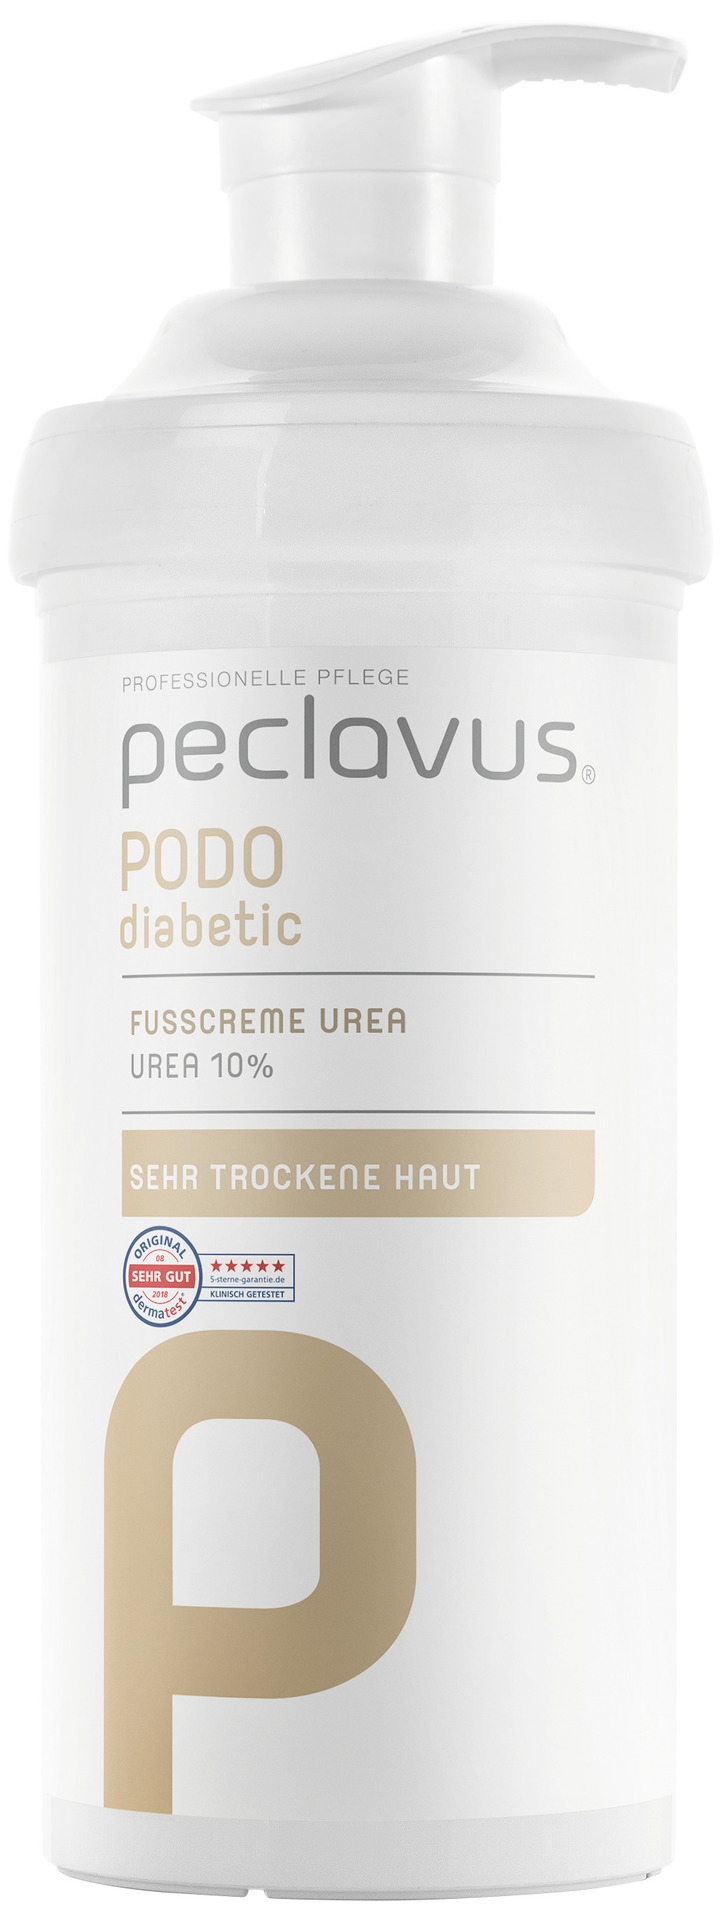 Peclavus PODOdiabetic Fußcreme Urea | 500 ml